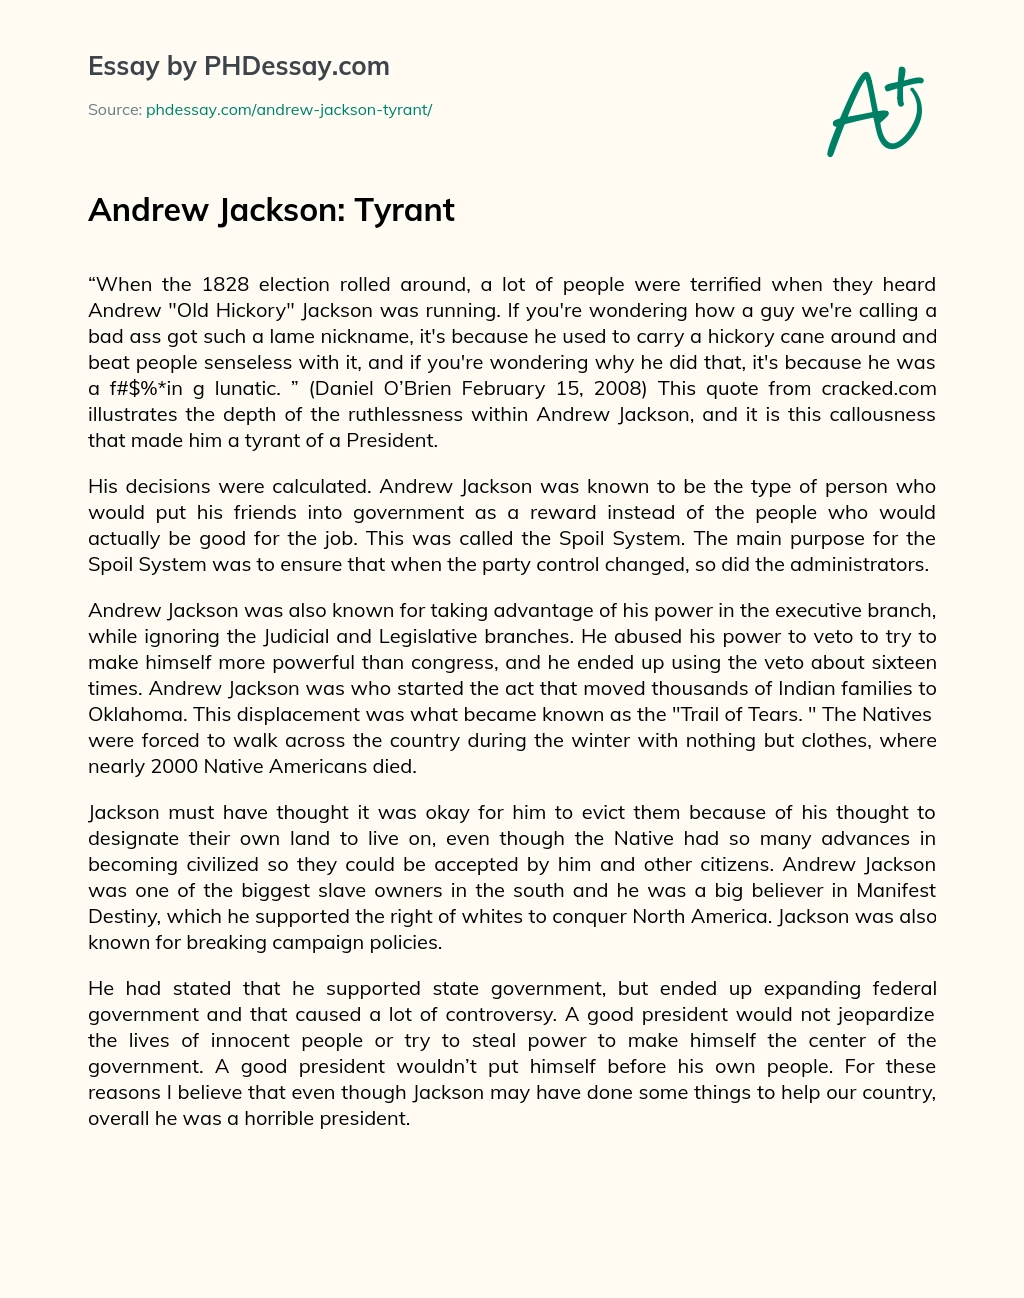 Andrew Jackson: Tyrant essay